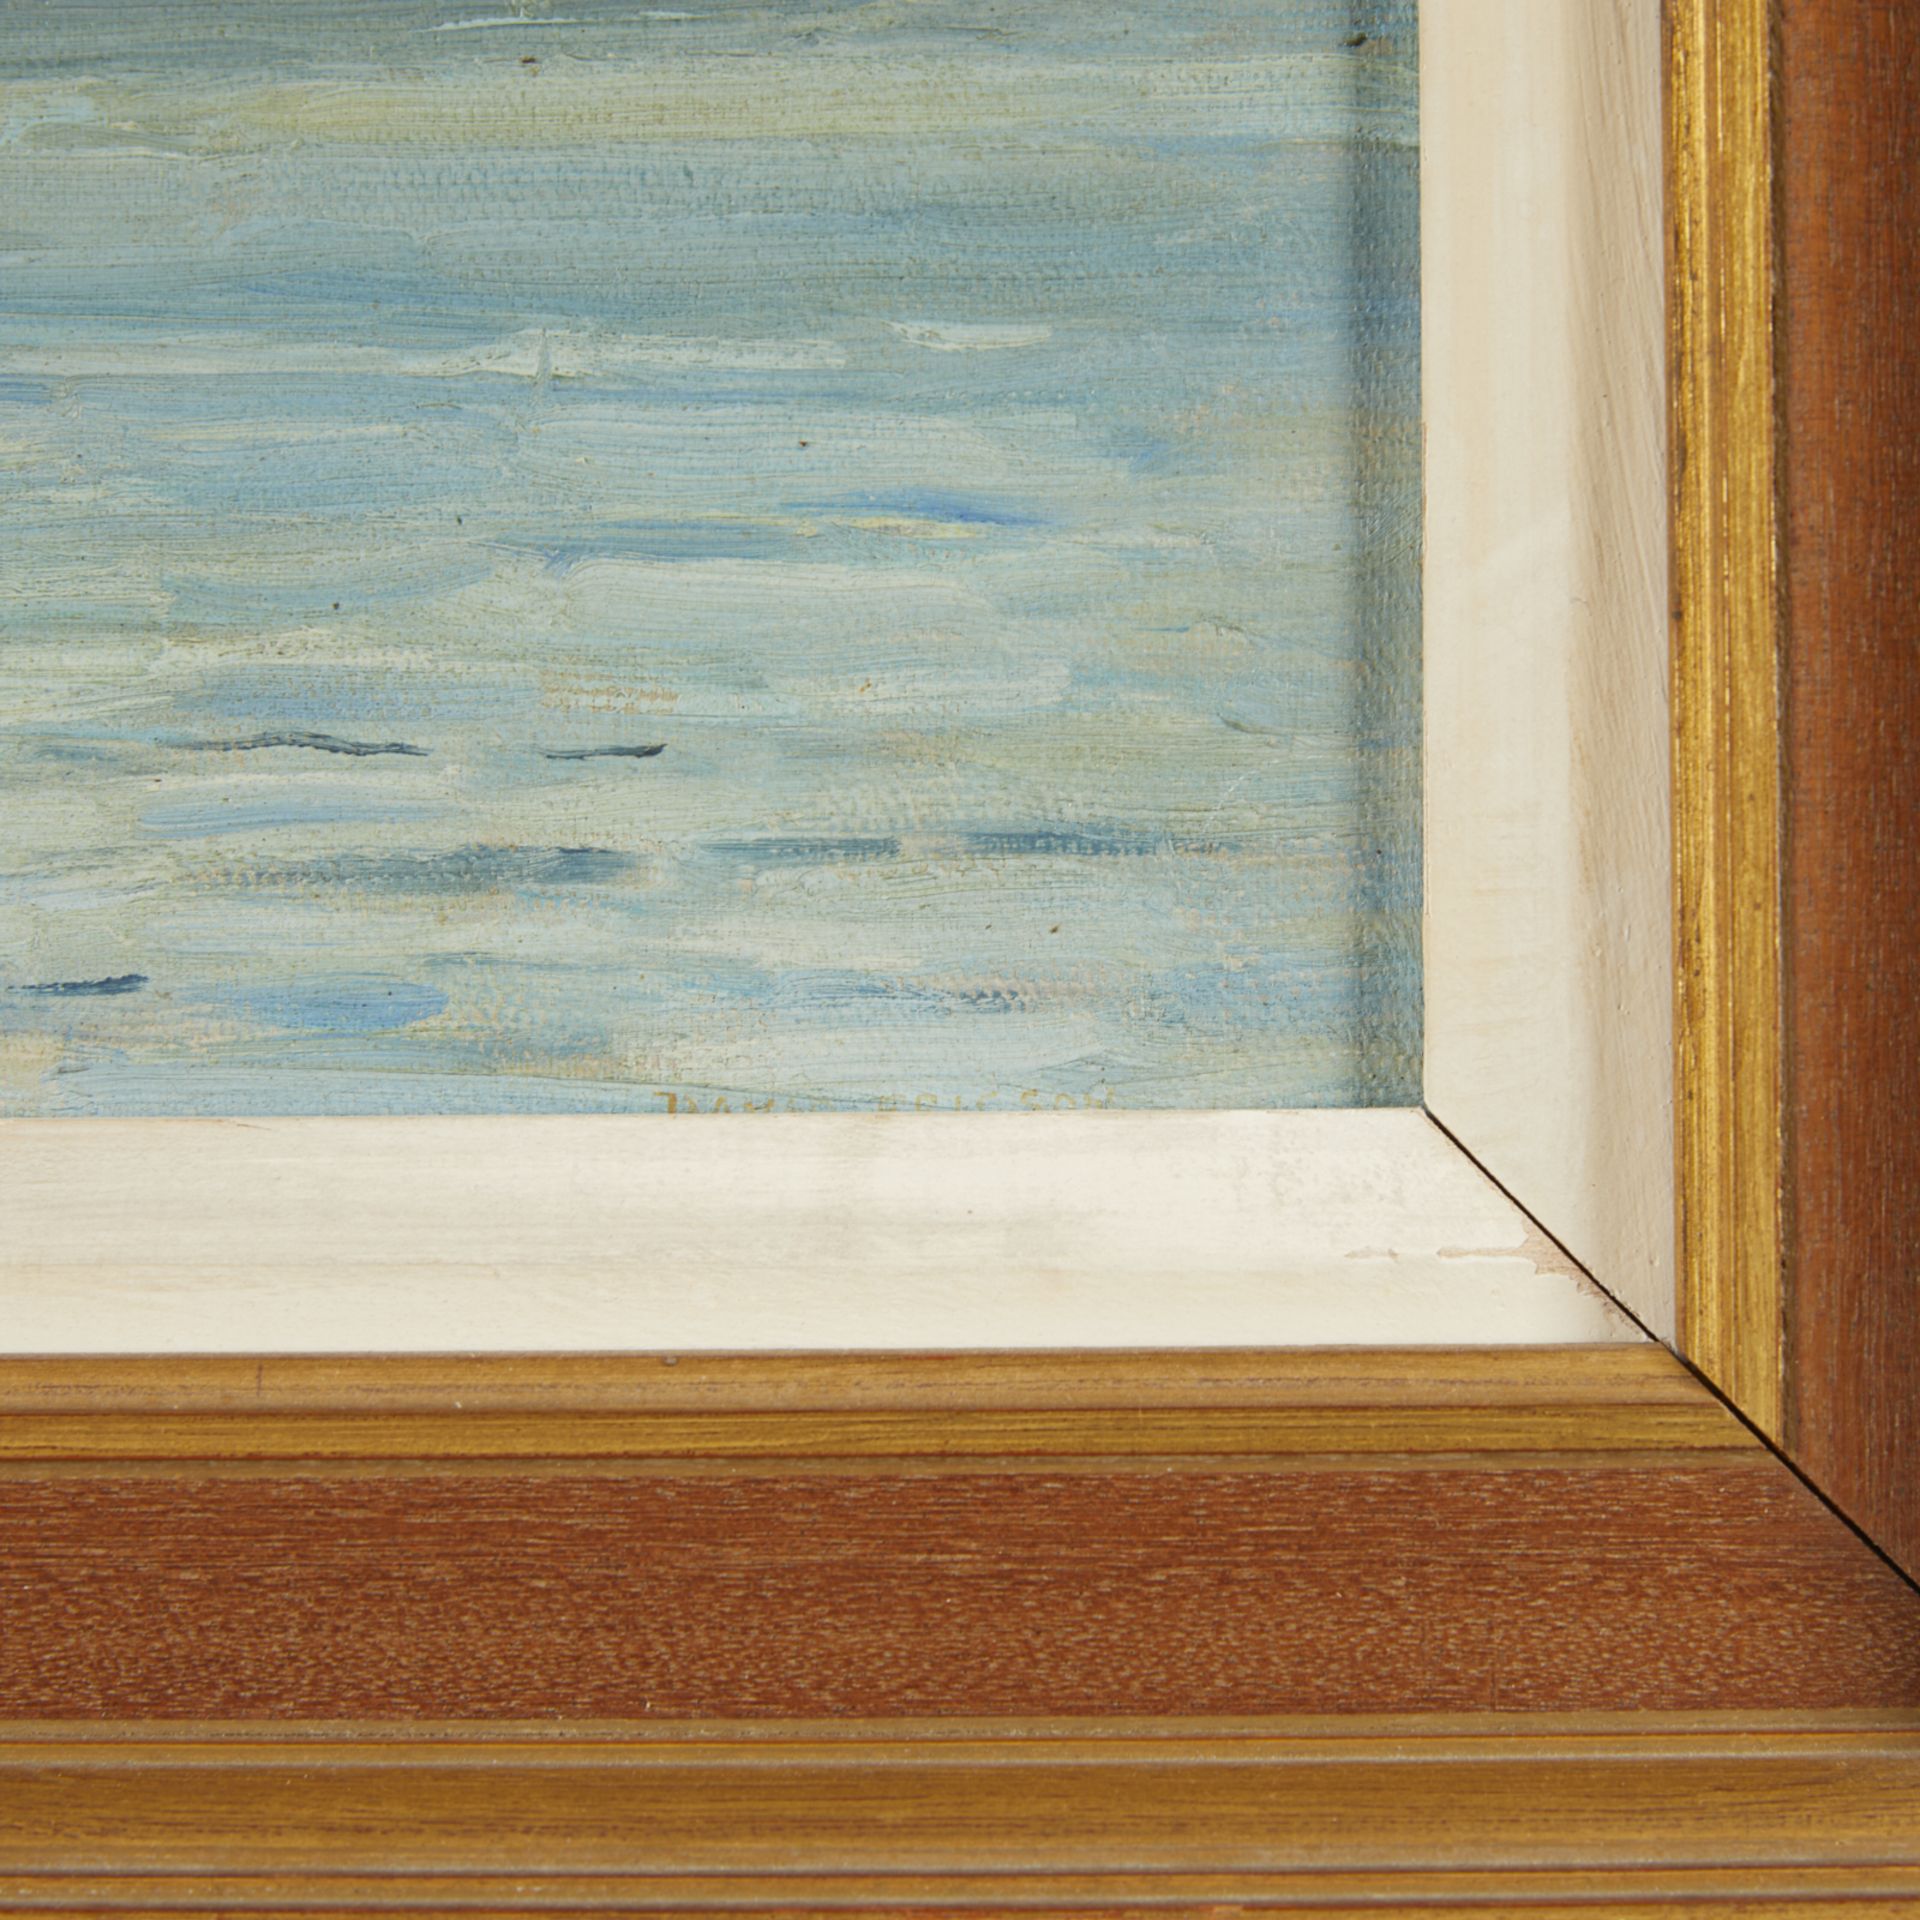 David Ericson "Lake Minnetonka" Oil Painting - Image 3 of 7